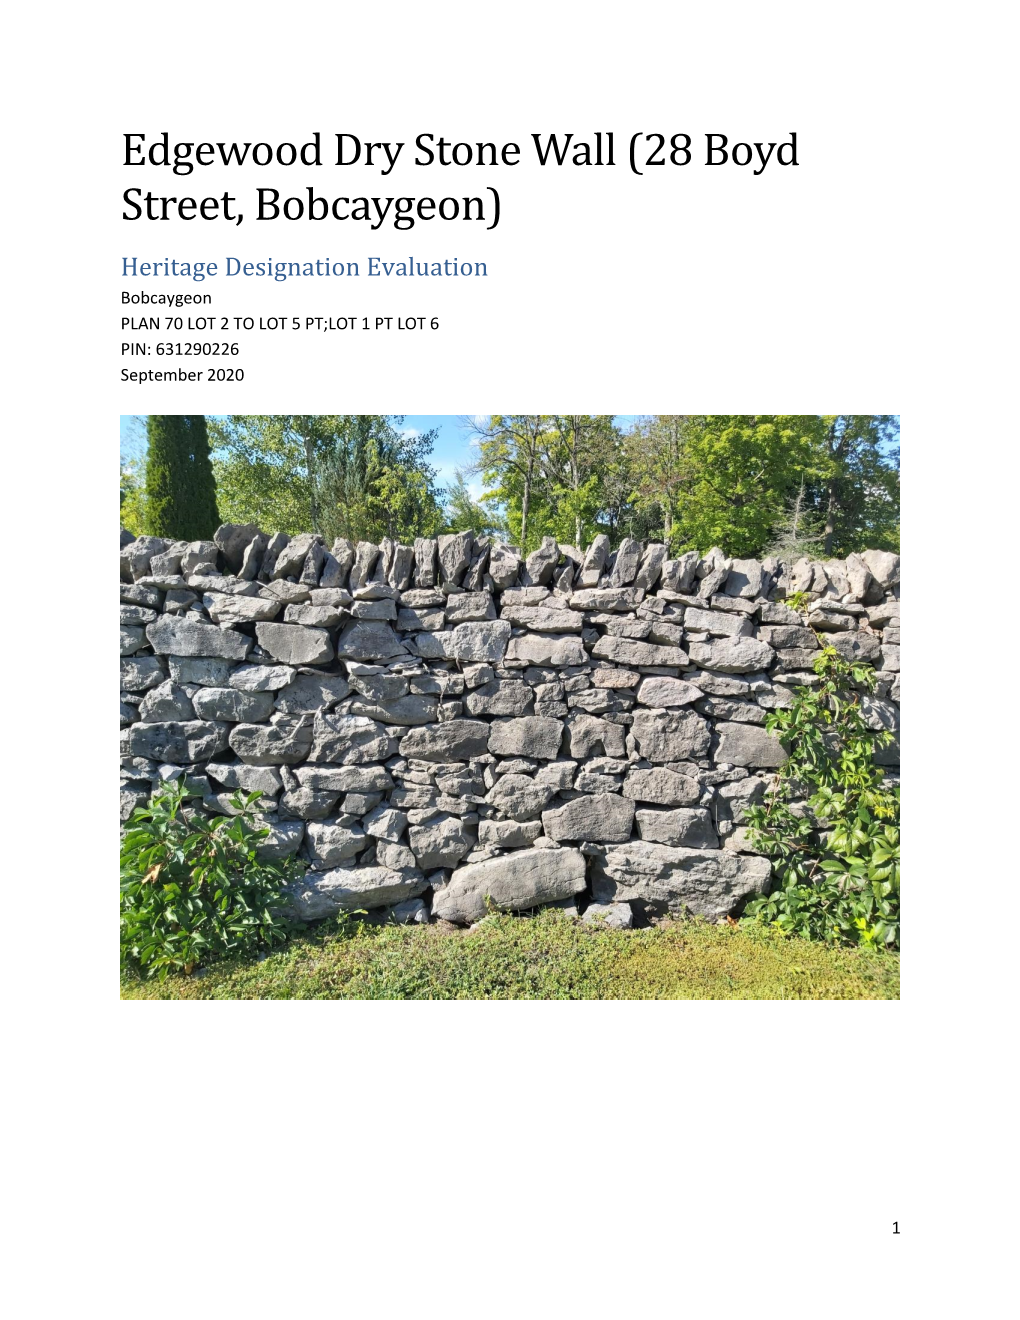 Edgewood Dry Stone Wall (28 Boyd Street, Bobcaygeon)